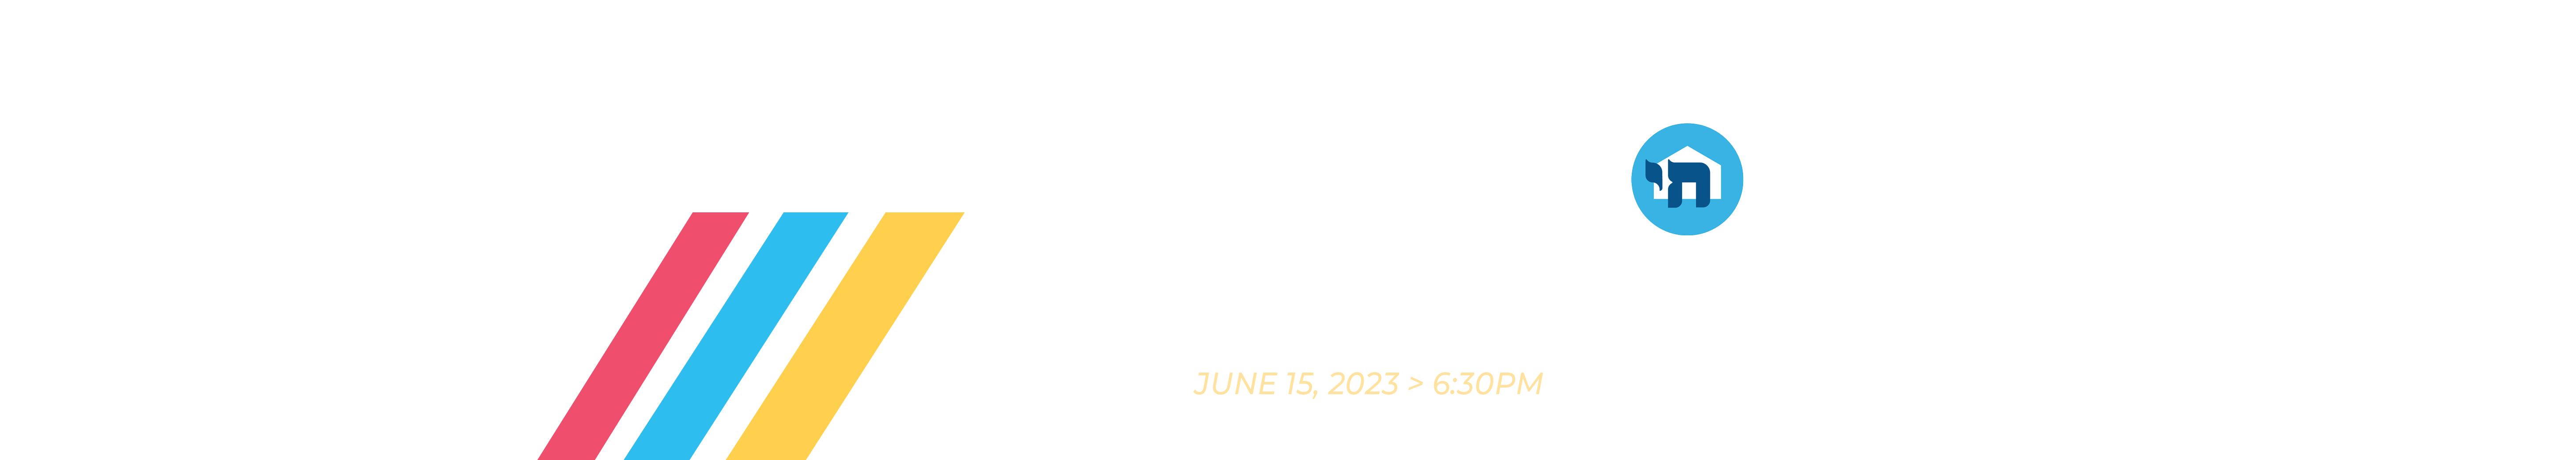 Raising The Roof 2023 | Building Momentum